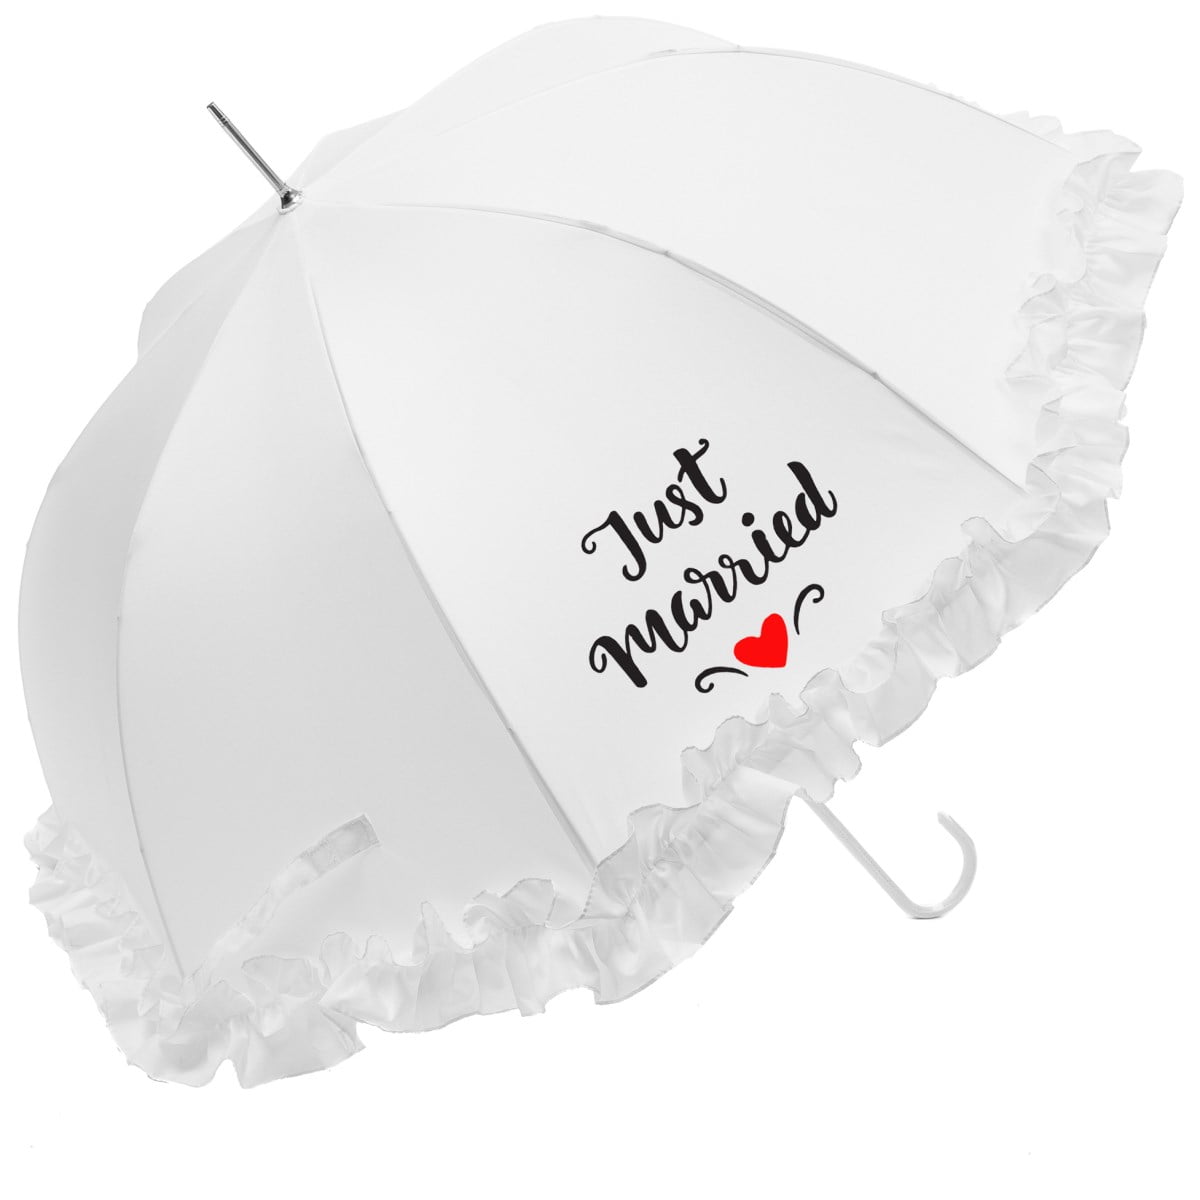 "Just Married" wedding umbrella